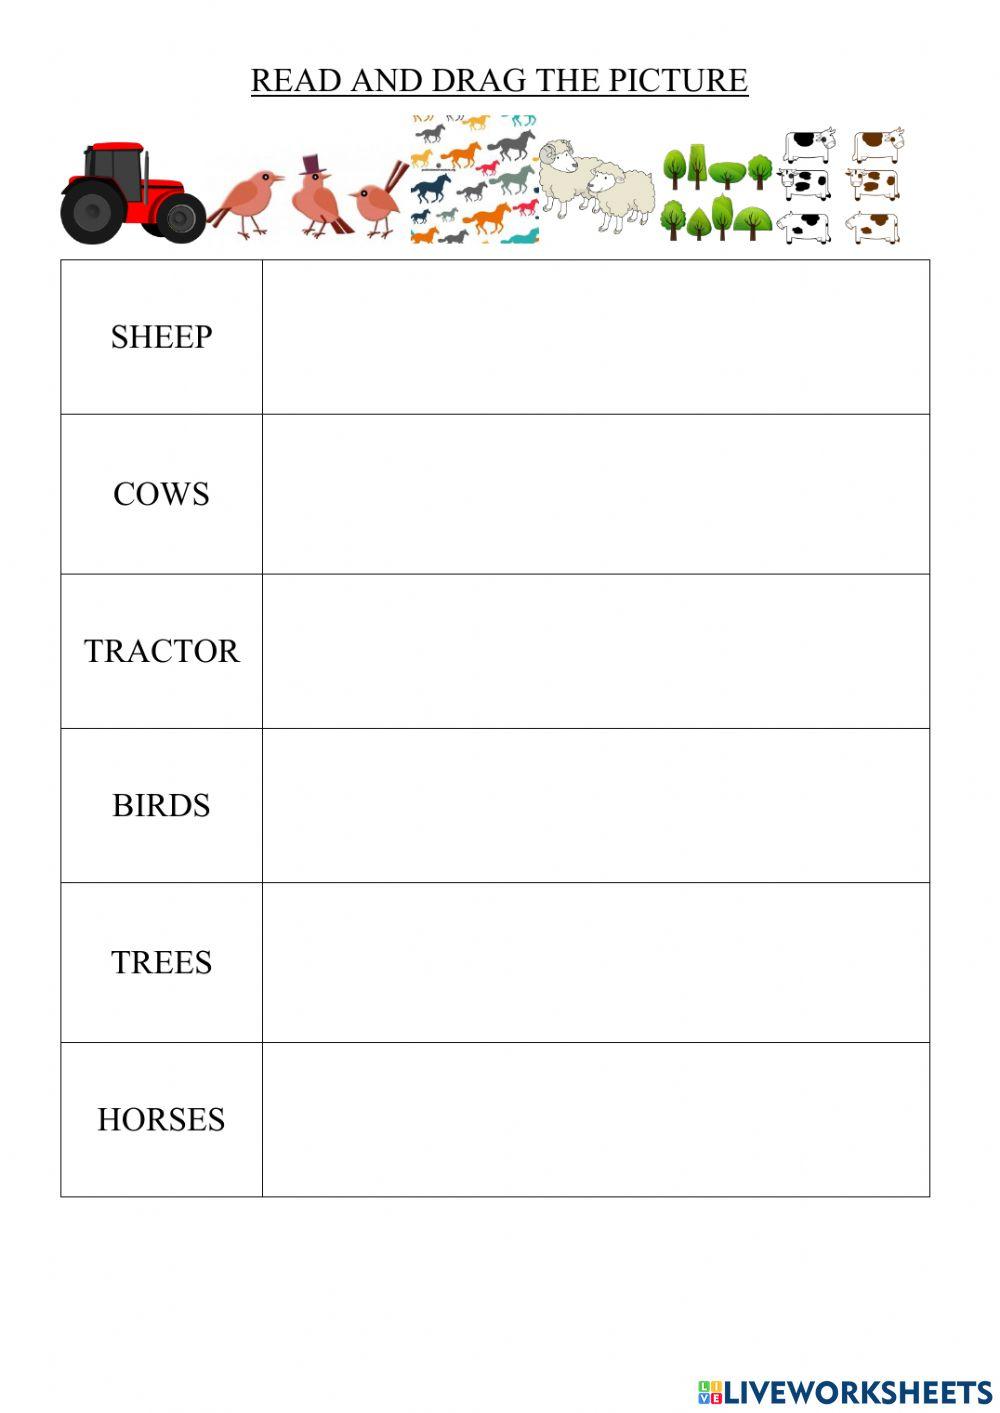 Farm vocabulary: read and drag